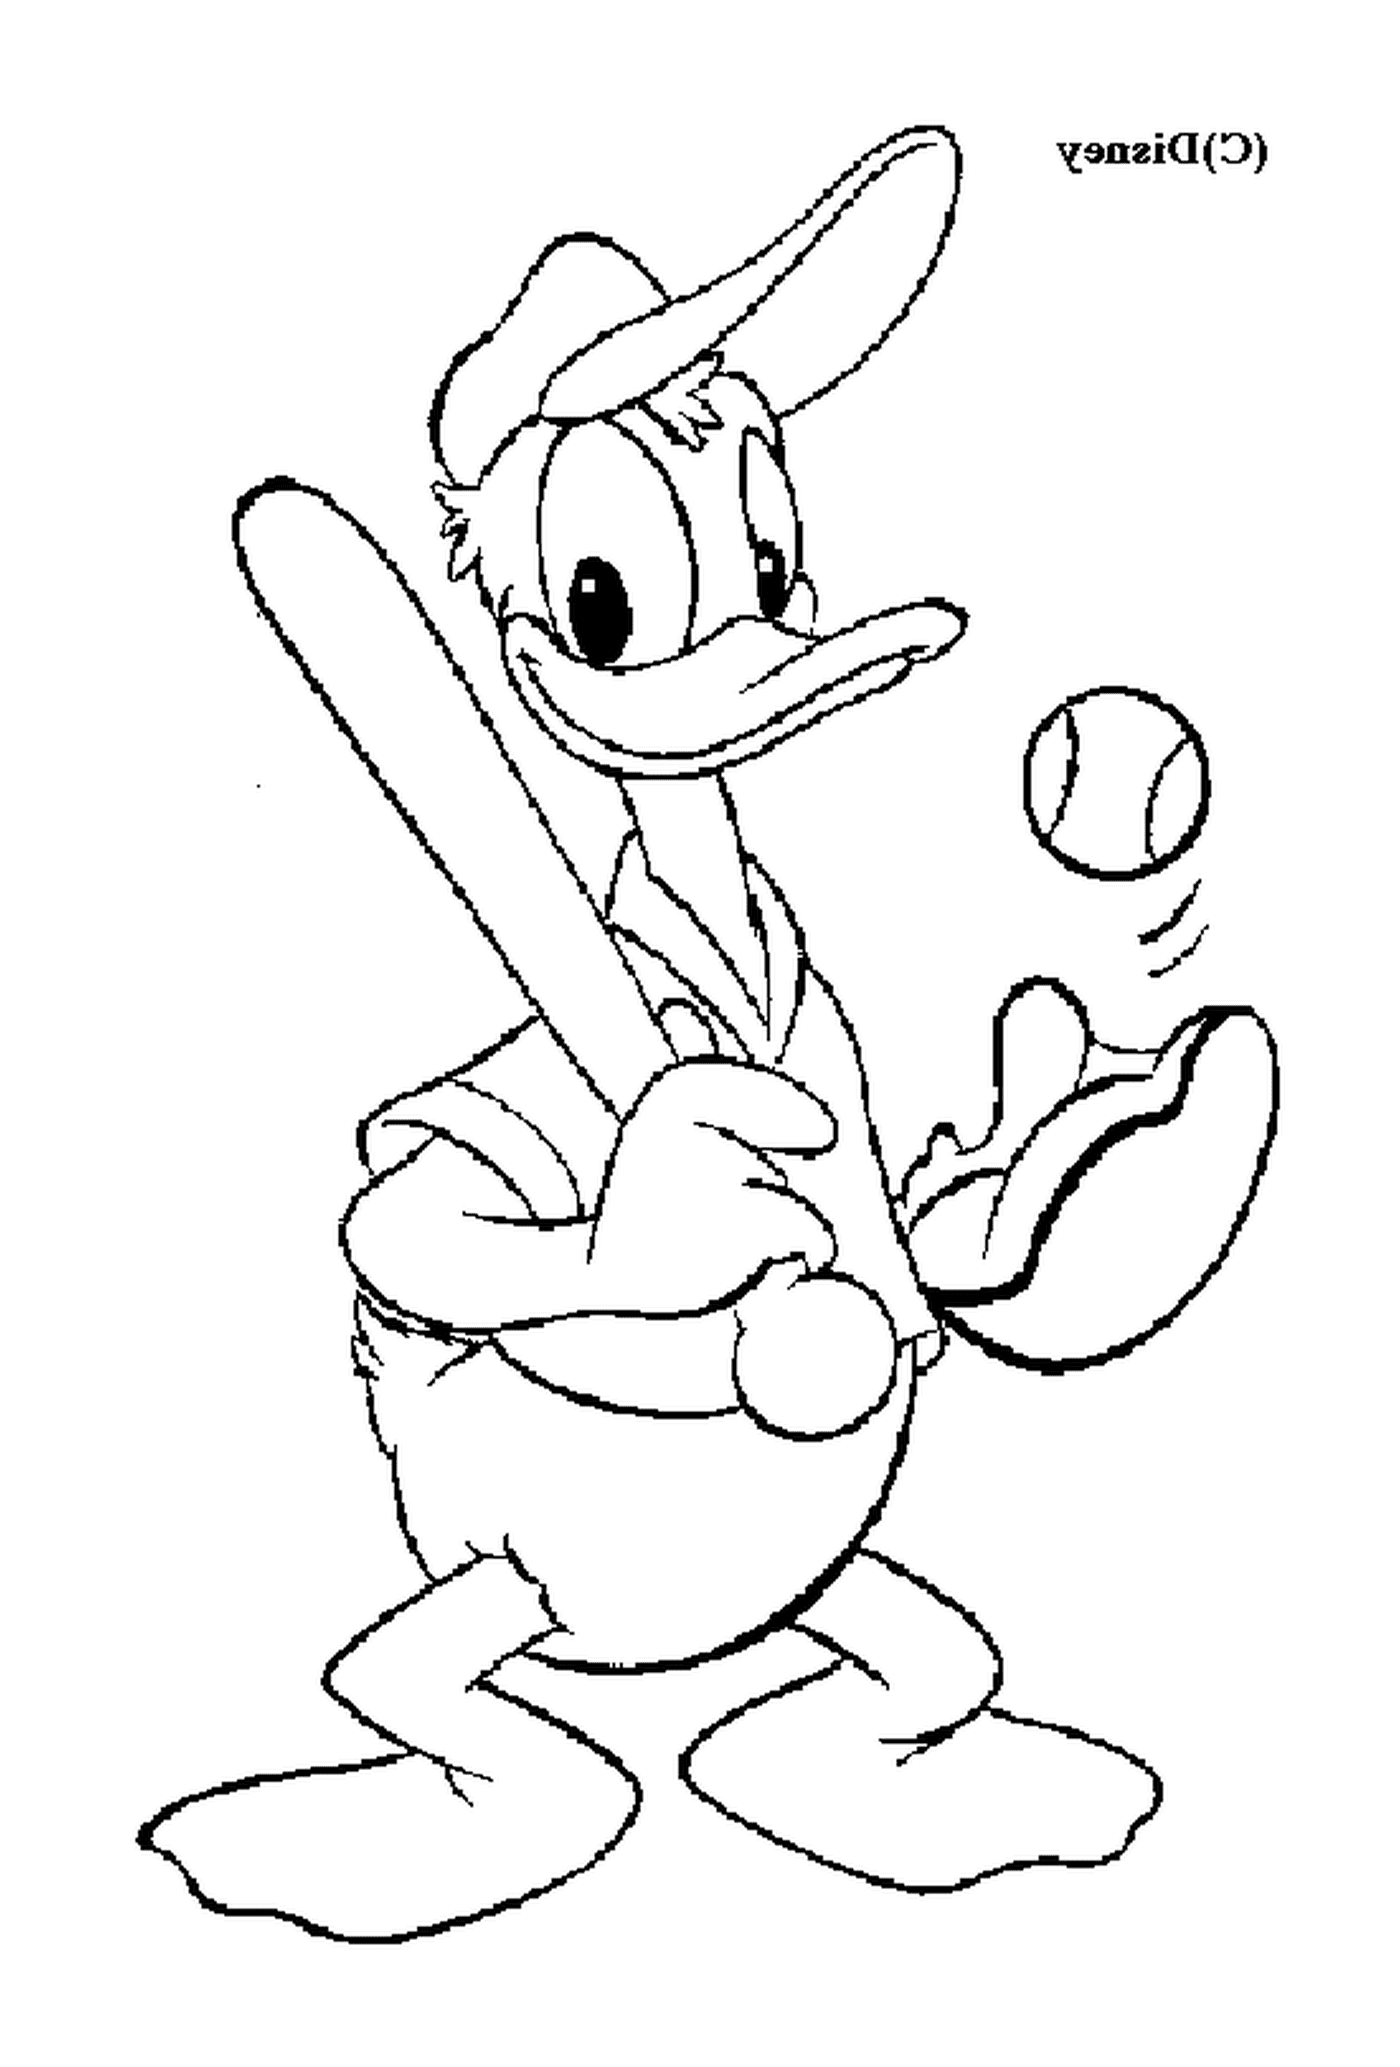  Donald juega béisbol con ardor 